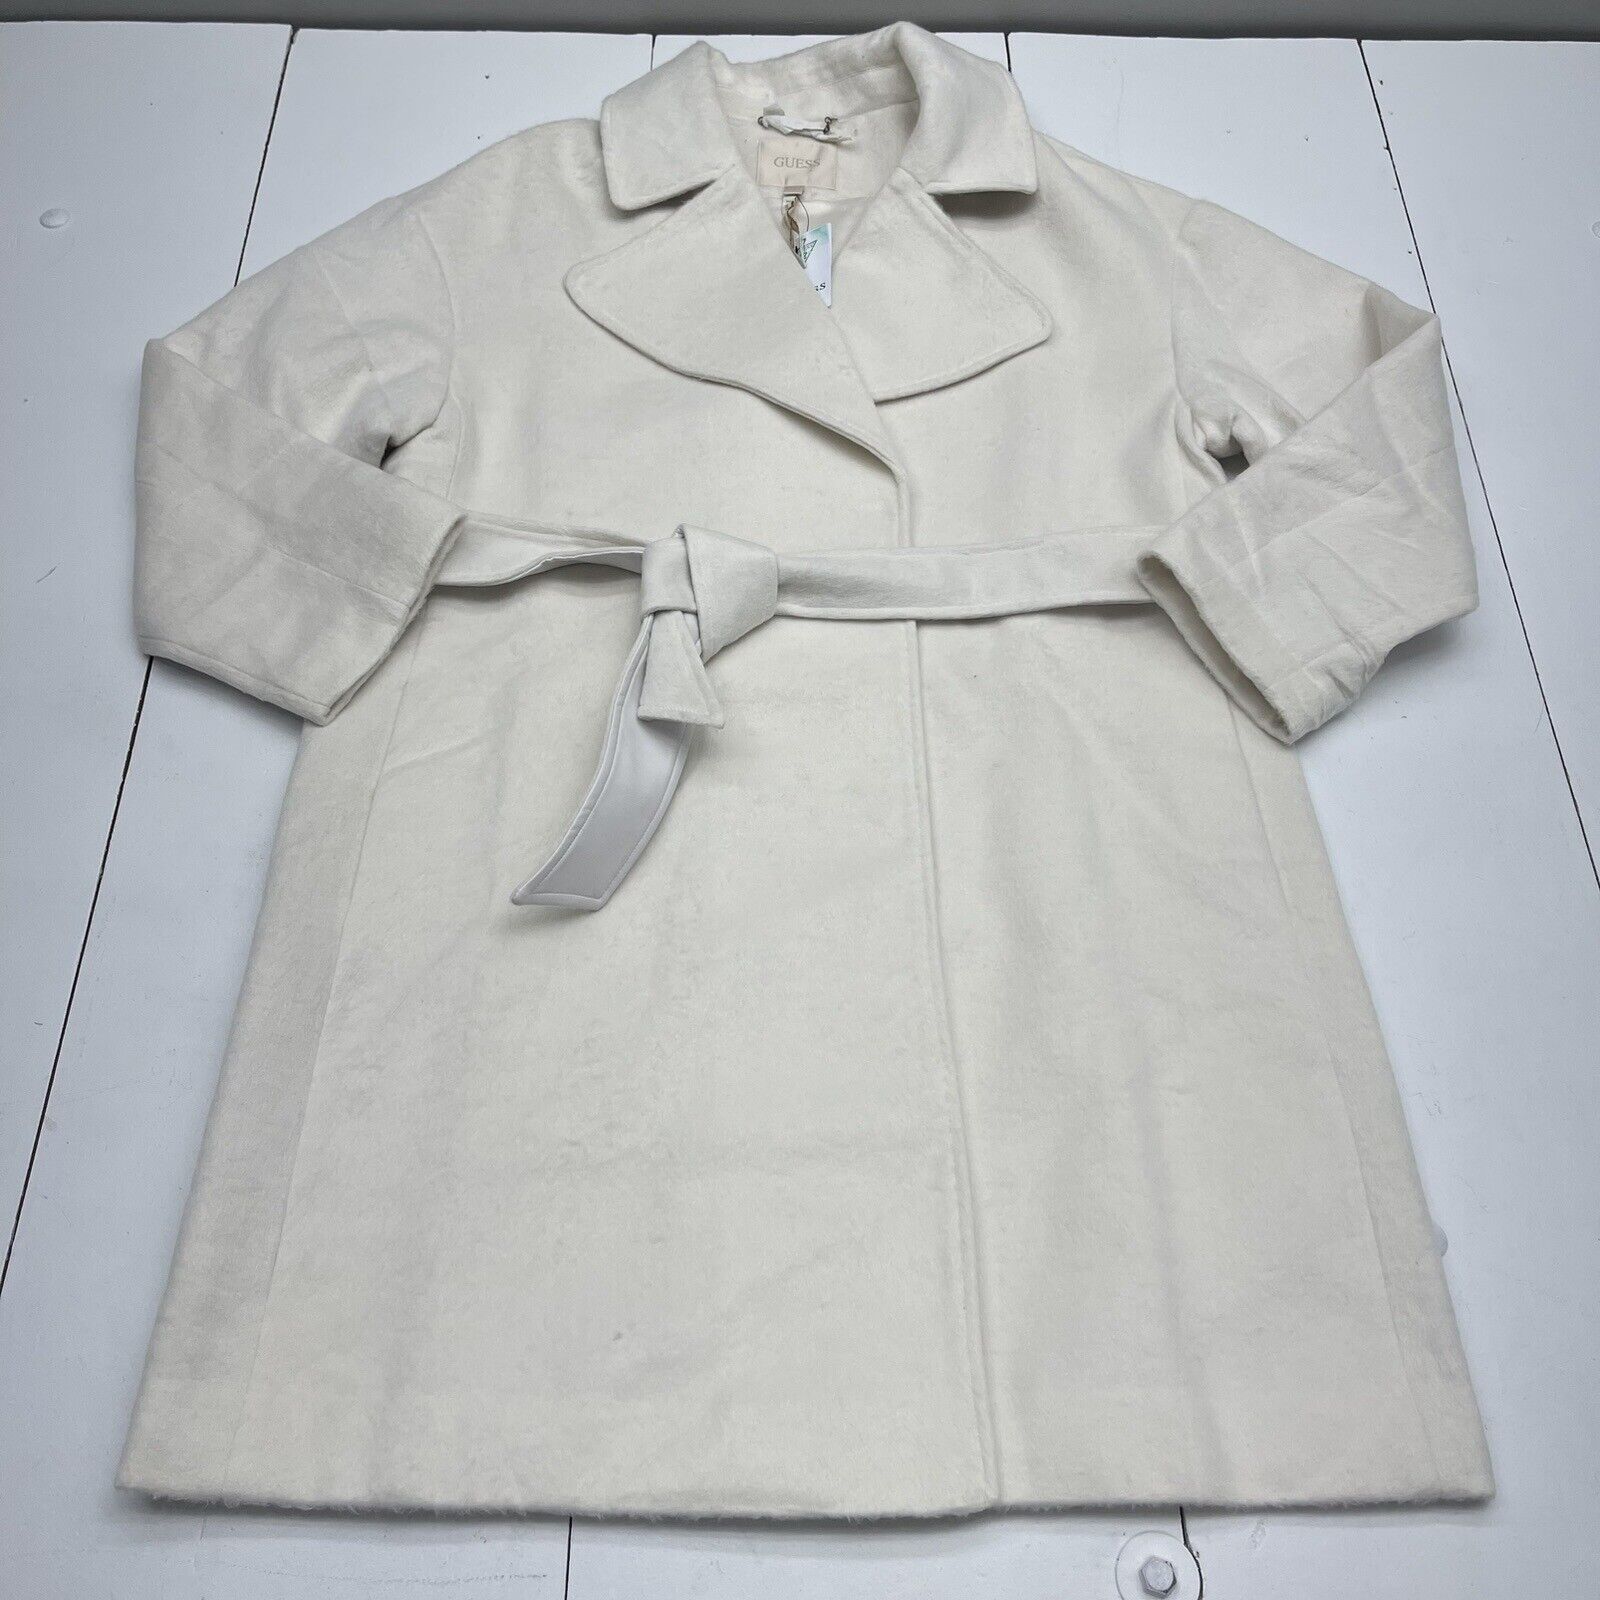 Guess Patrizia Cream Belted Coat Women’s Size Medium New Defect $198